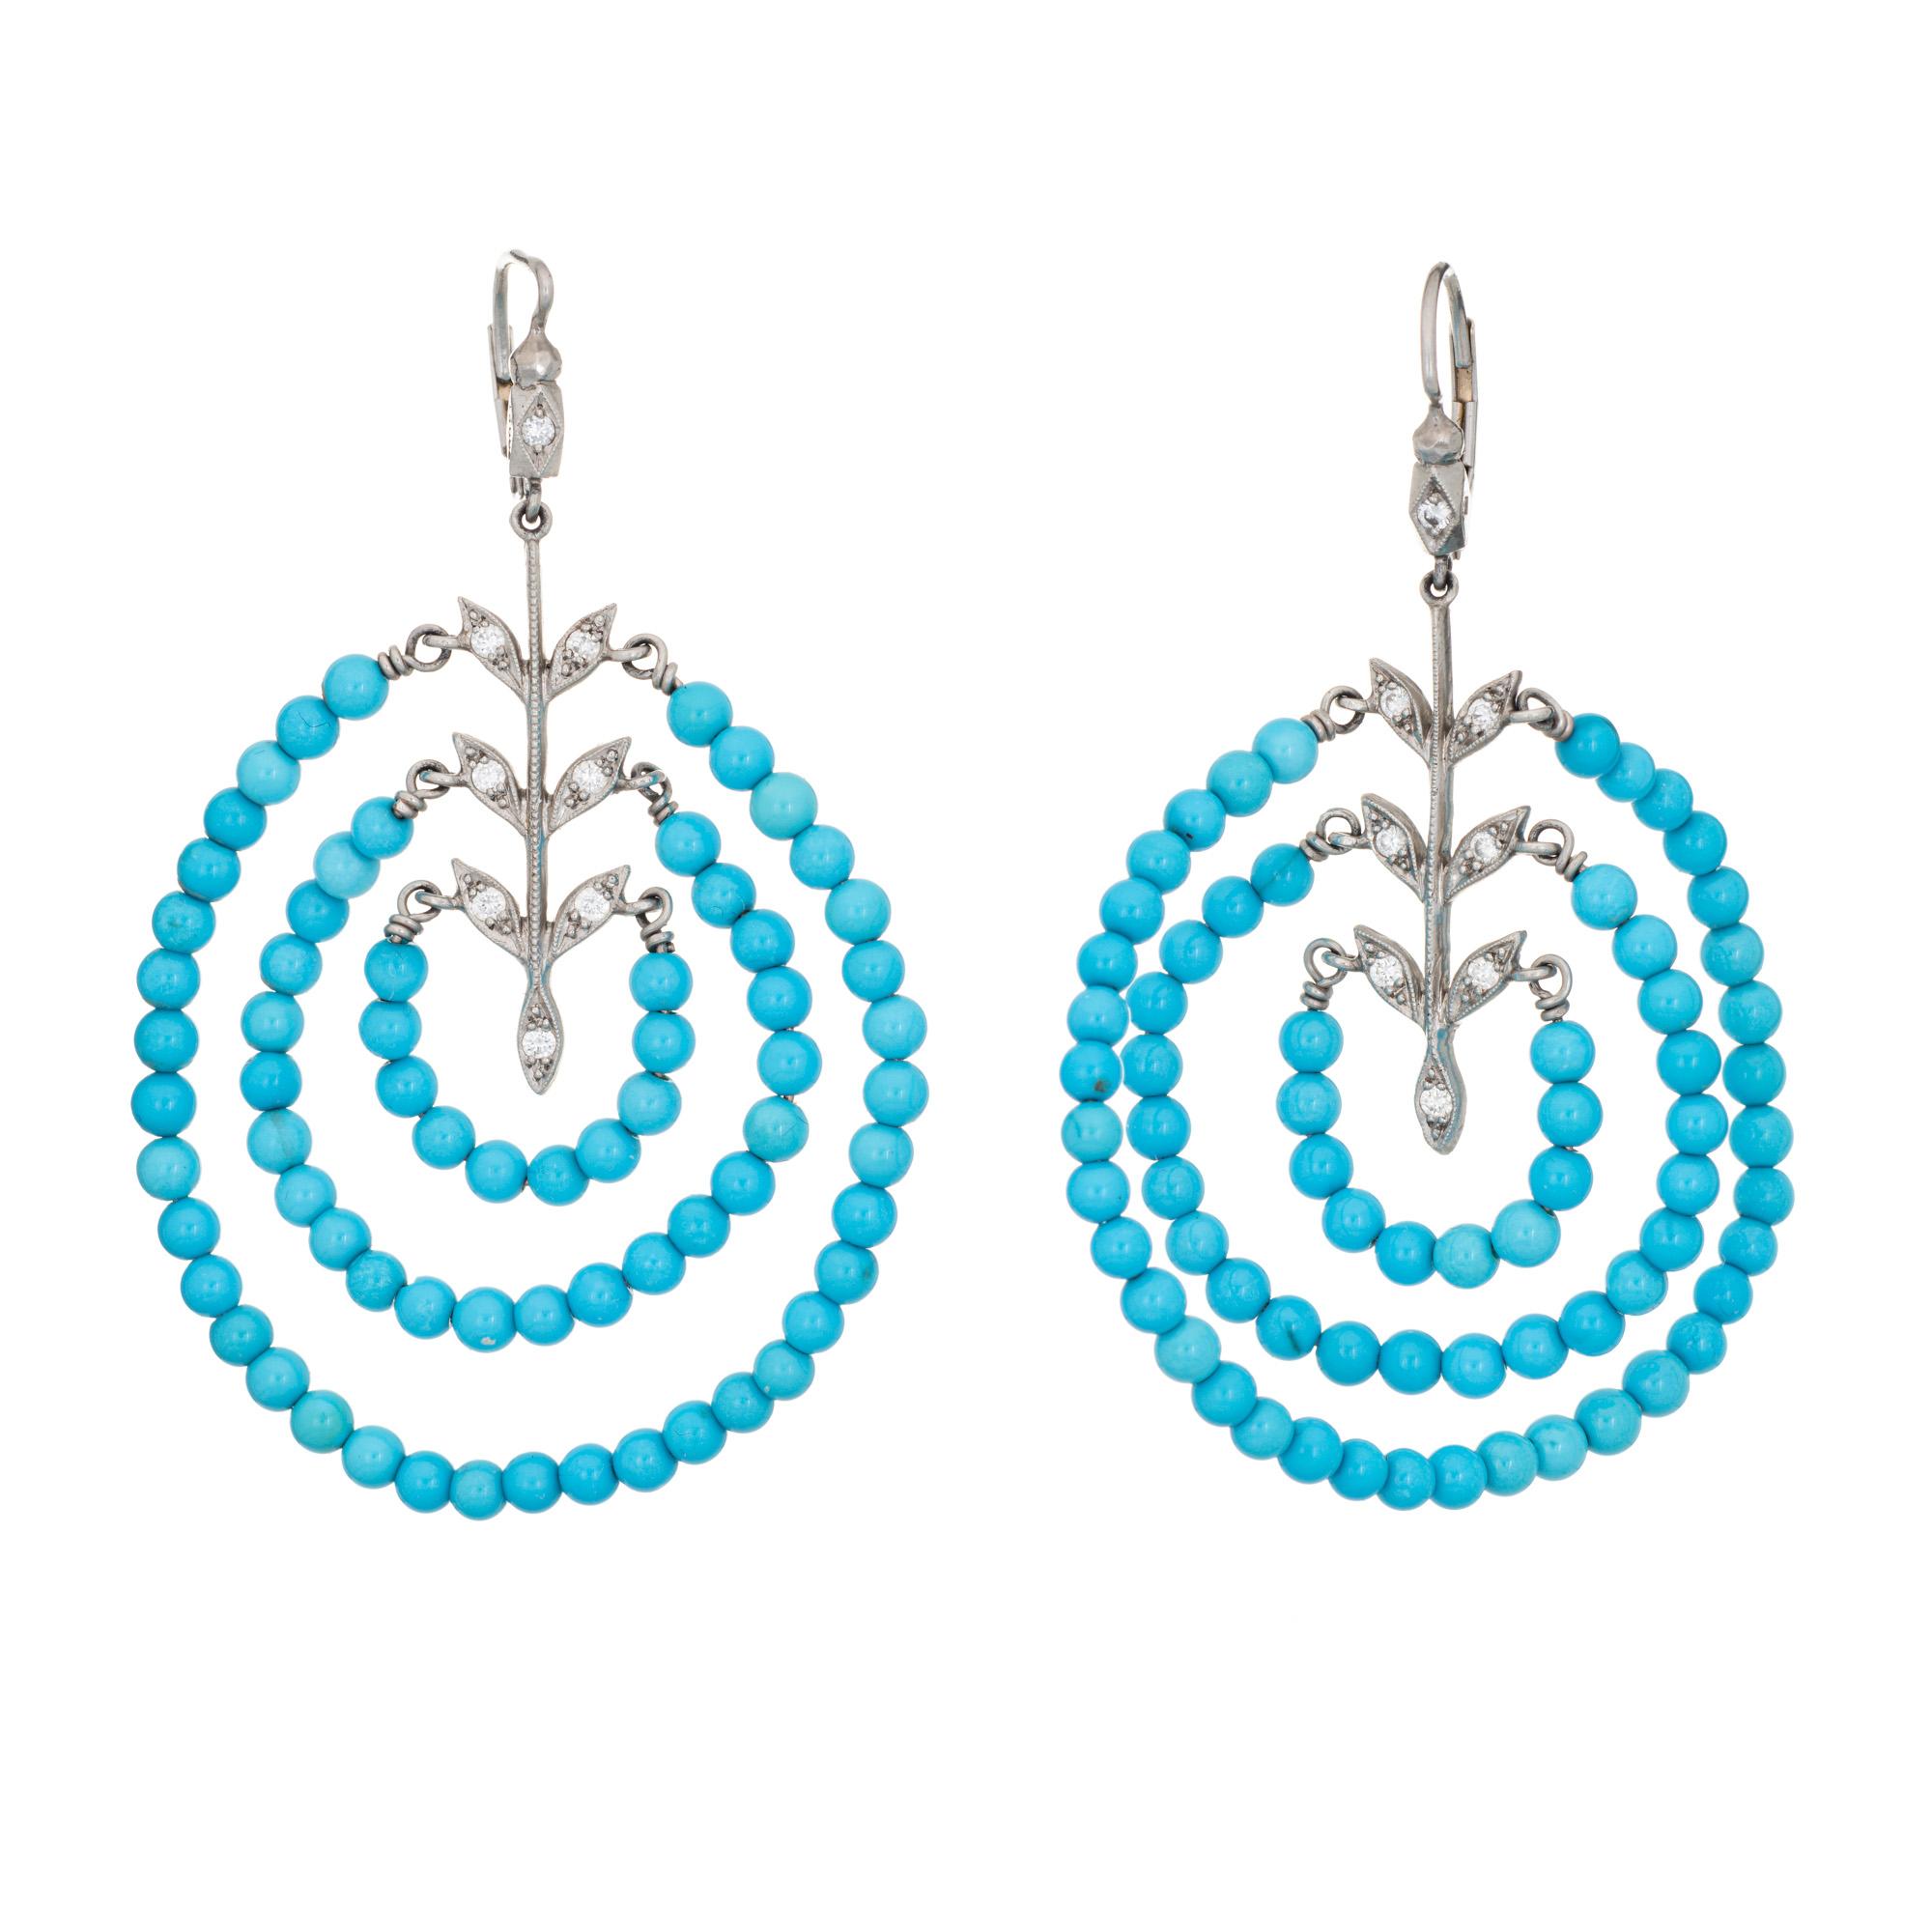 Contemporary Cathy Waterman Turquoise Diamond Earrings Multi Hoop Drops Estate Fine Jewelry For Sale